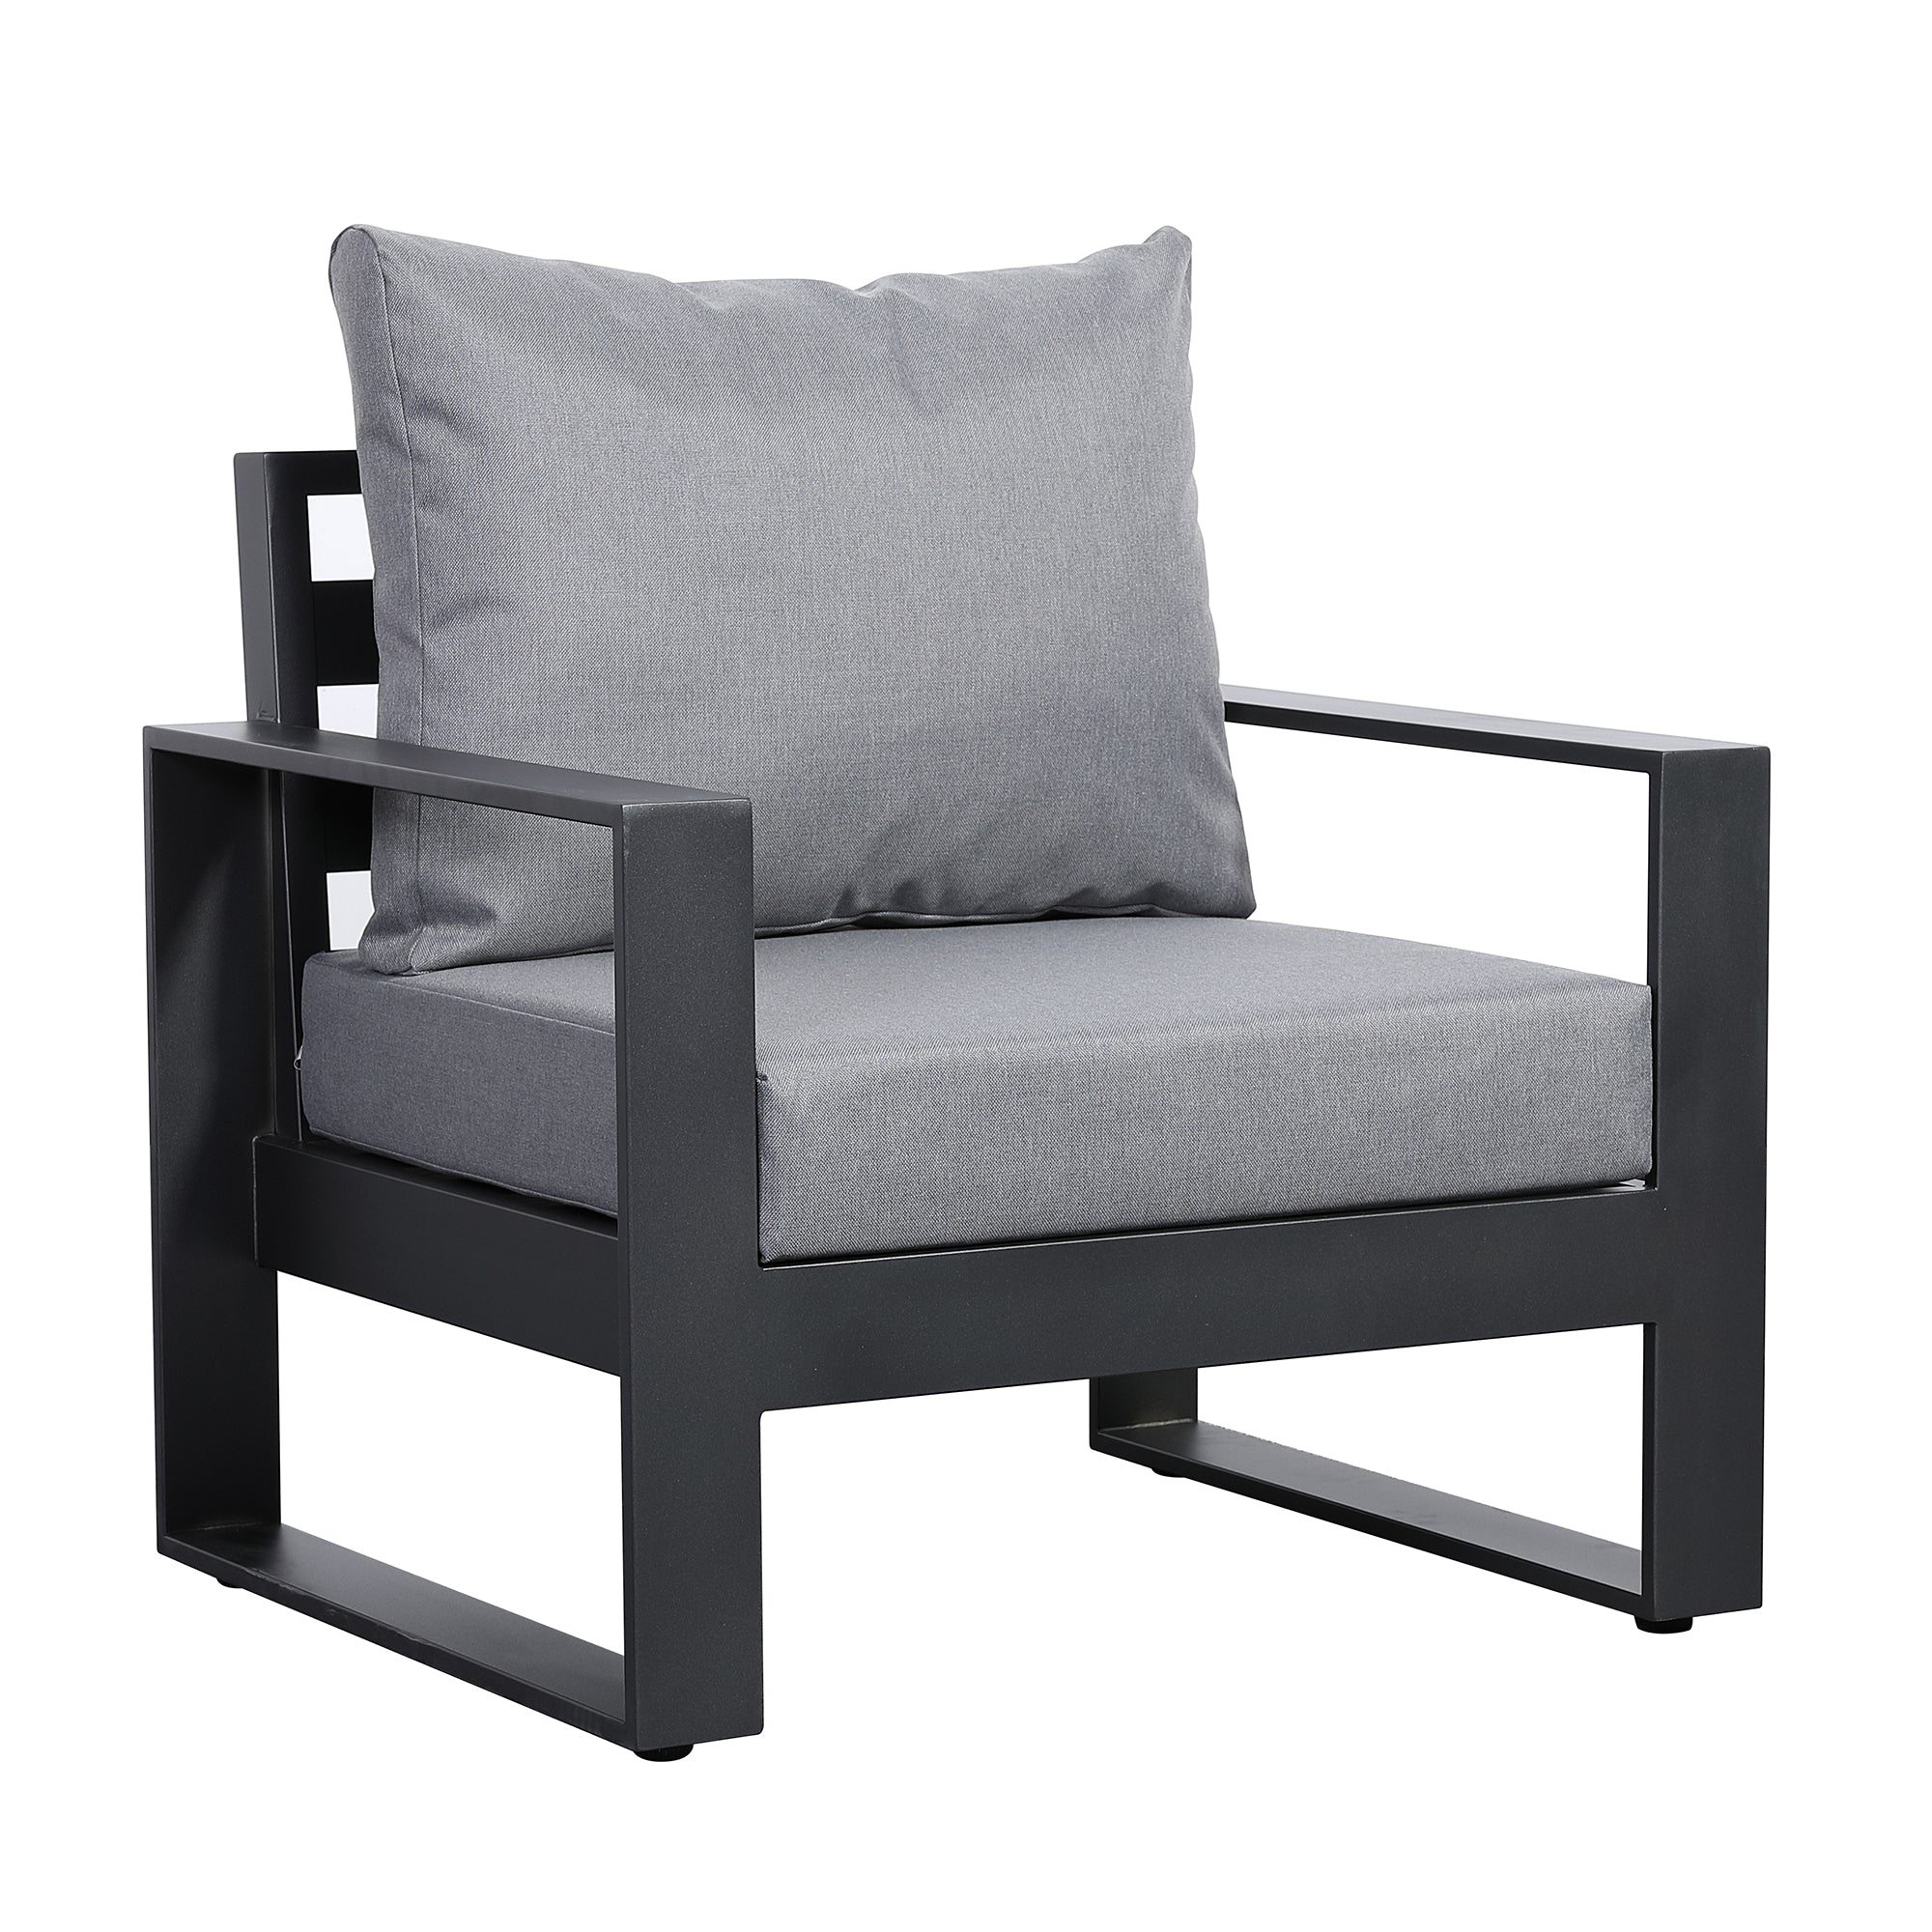 Halo Range Single Arm Chair - Charcoal Aluminium Frame with Grey cushions